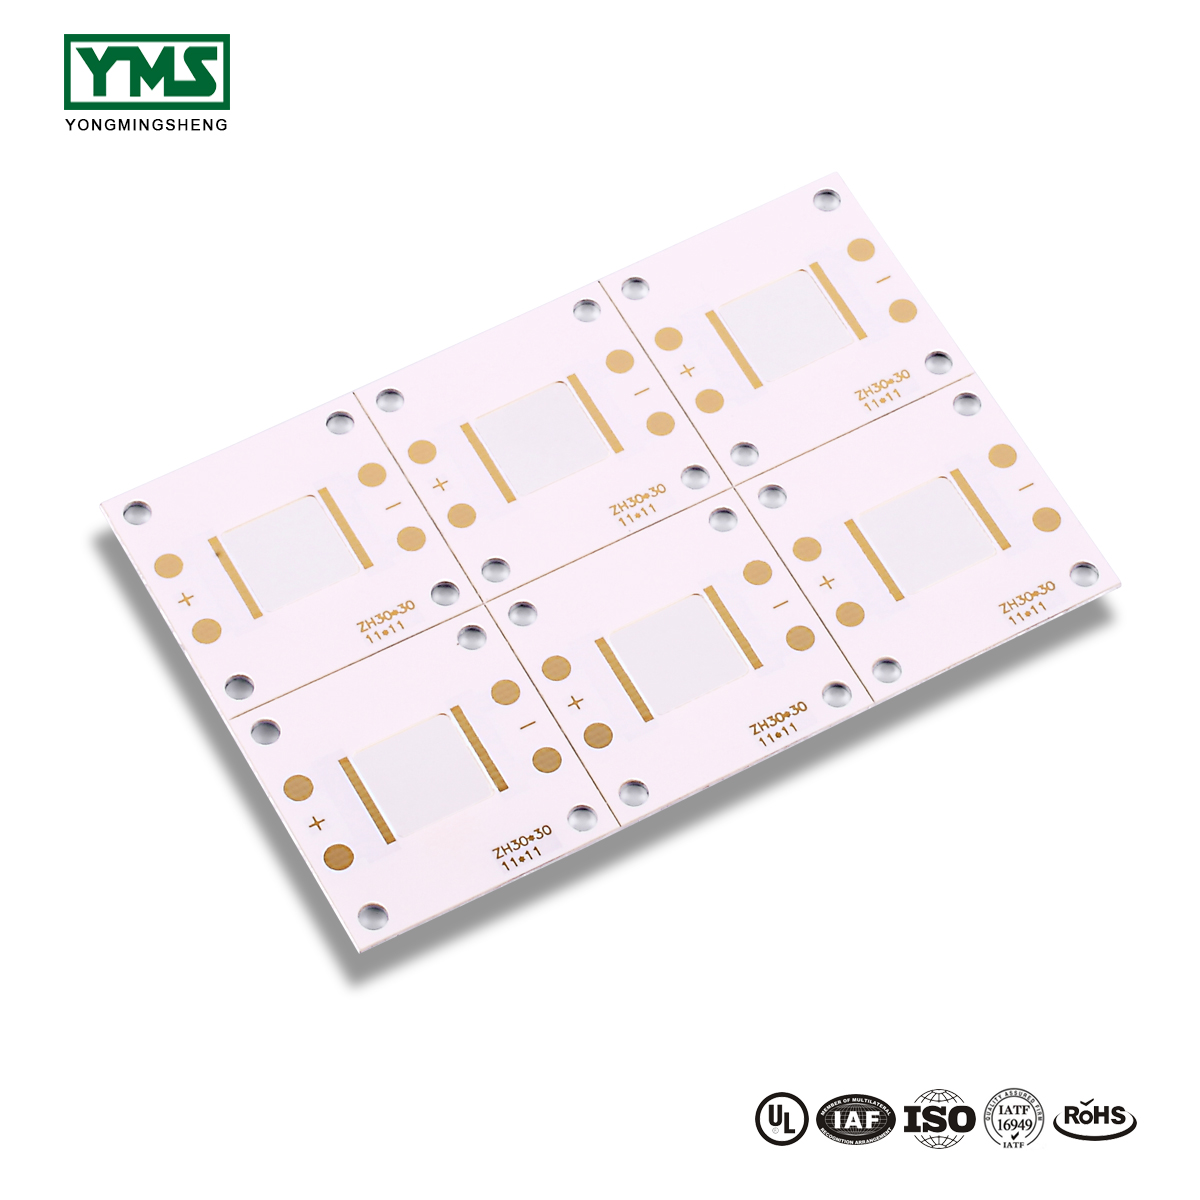 Well-designed Led Lighting Aluminum Pcb - 1Layer mirror Aluminum Base Board | YMSPCB – Yongmingsheng